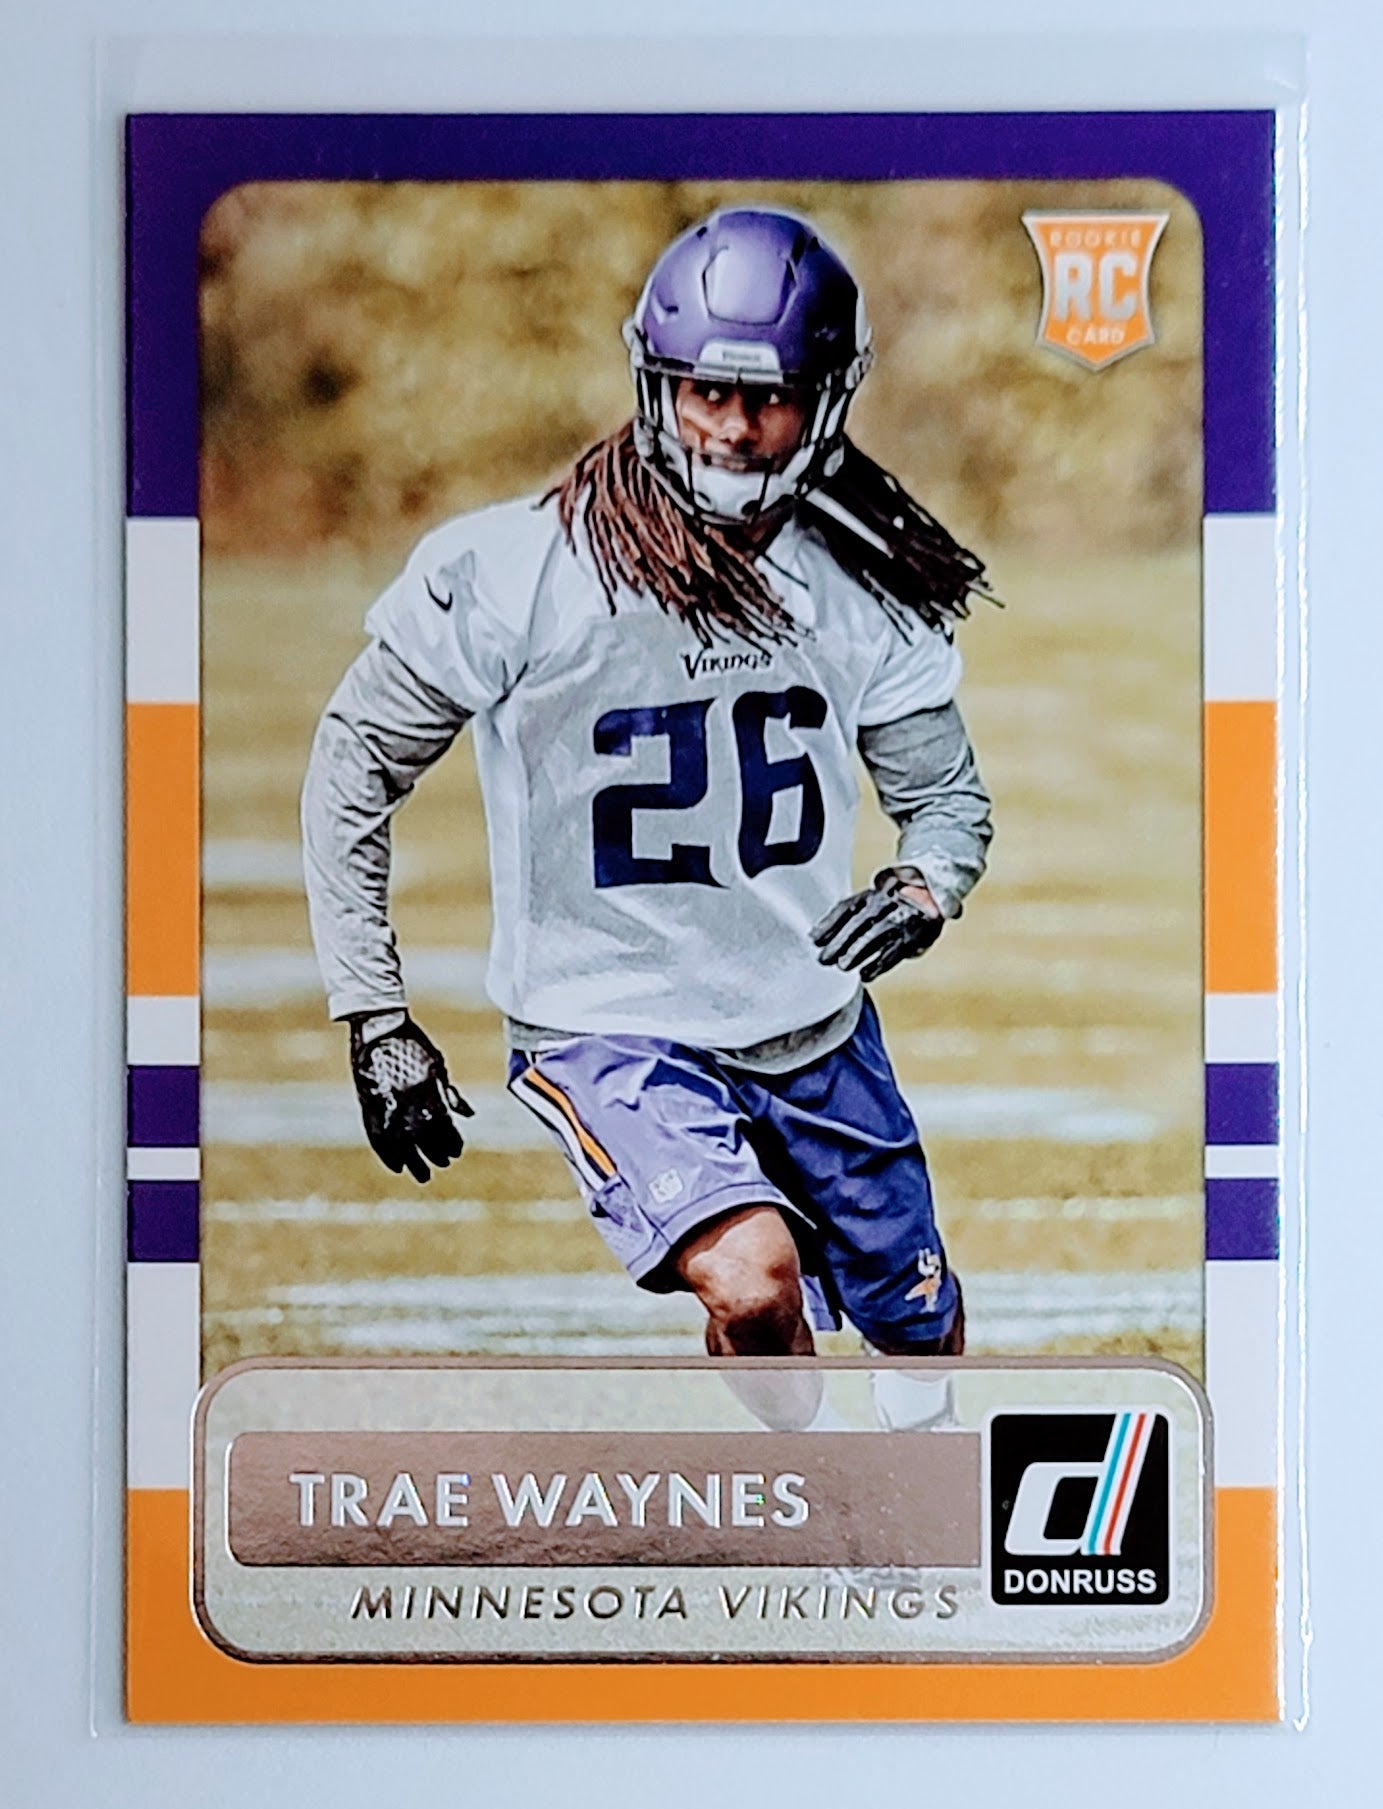 2015 Donruss Trae Waynes RC Minnesota
  Vikings Football Card  TH1CB simple Xclusive Collectibles   